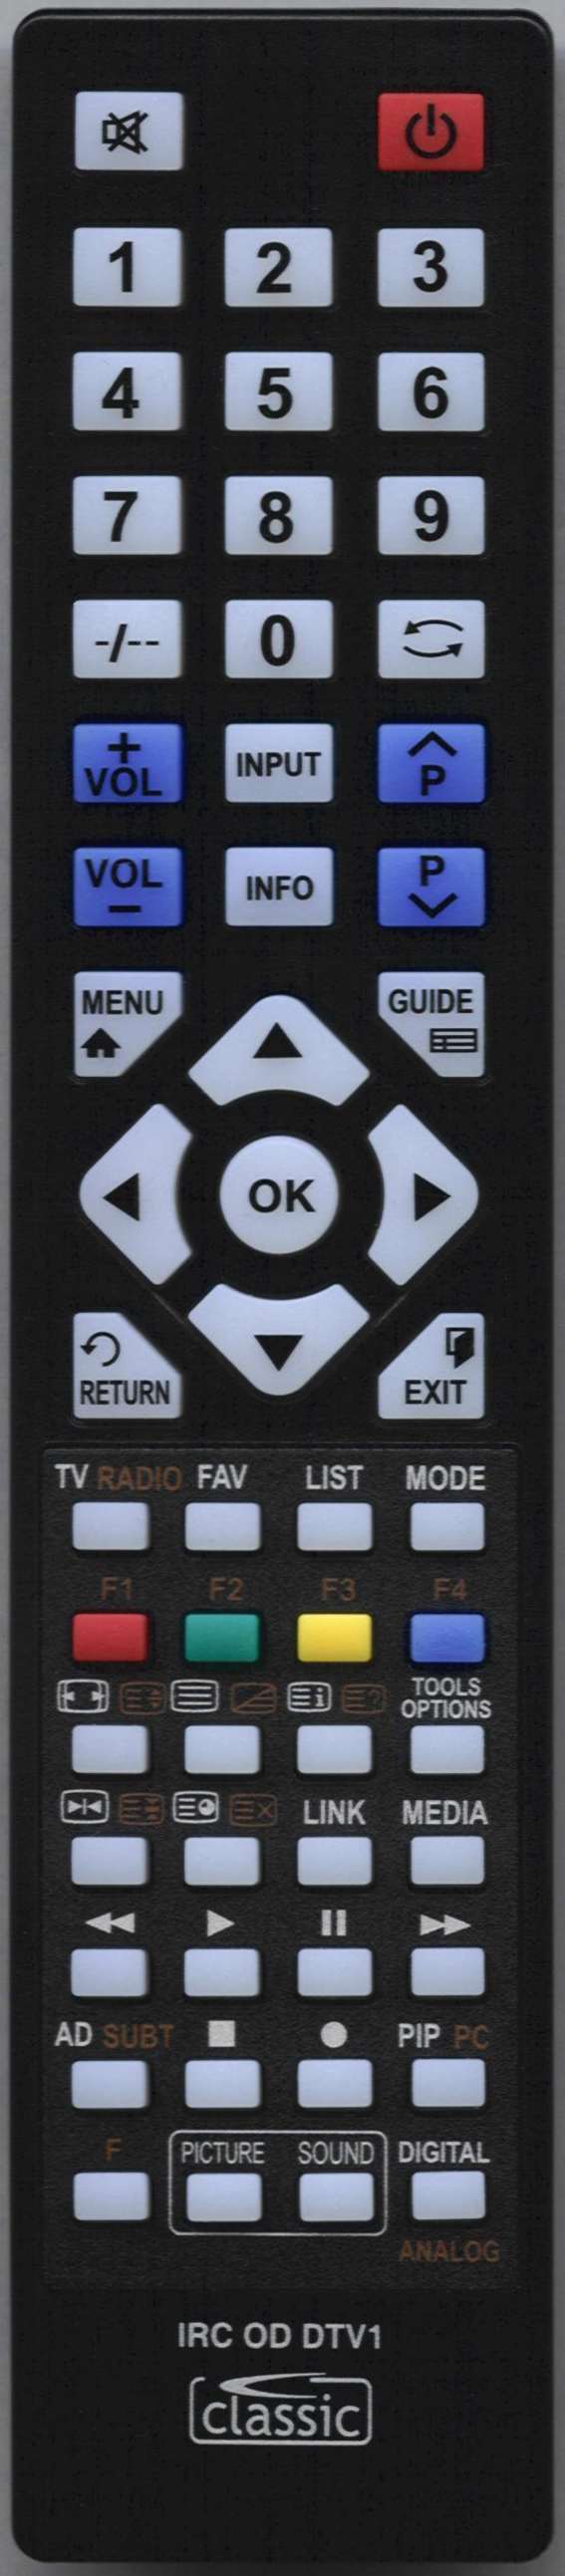 Samsung AA59-00104M Remote Control